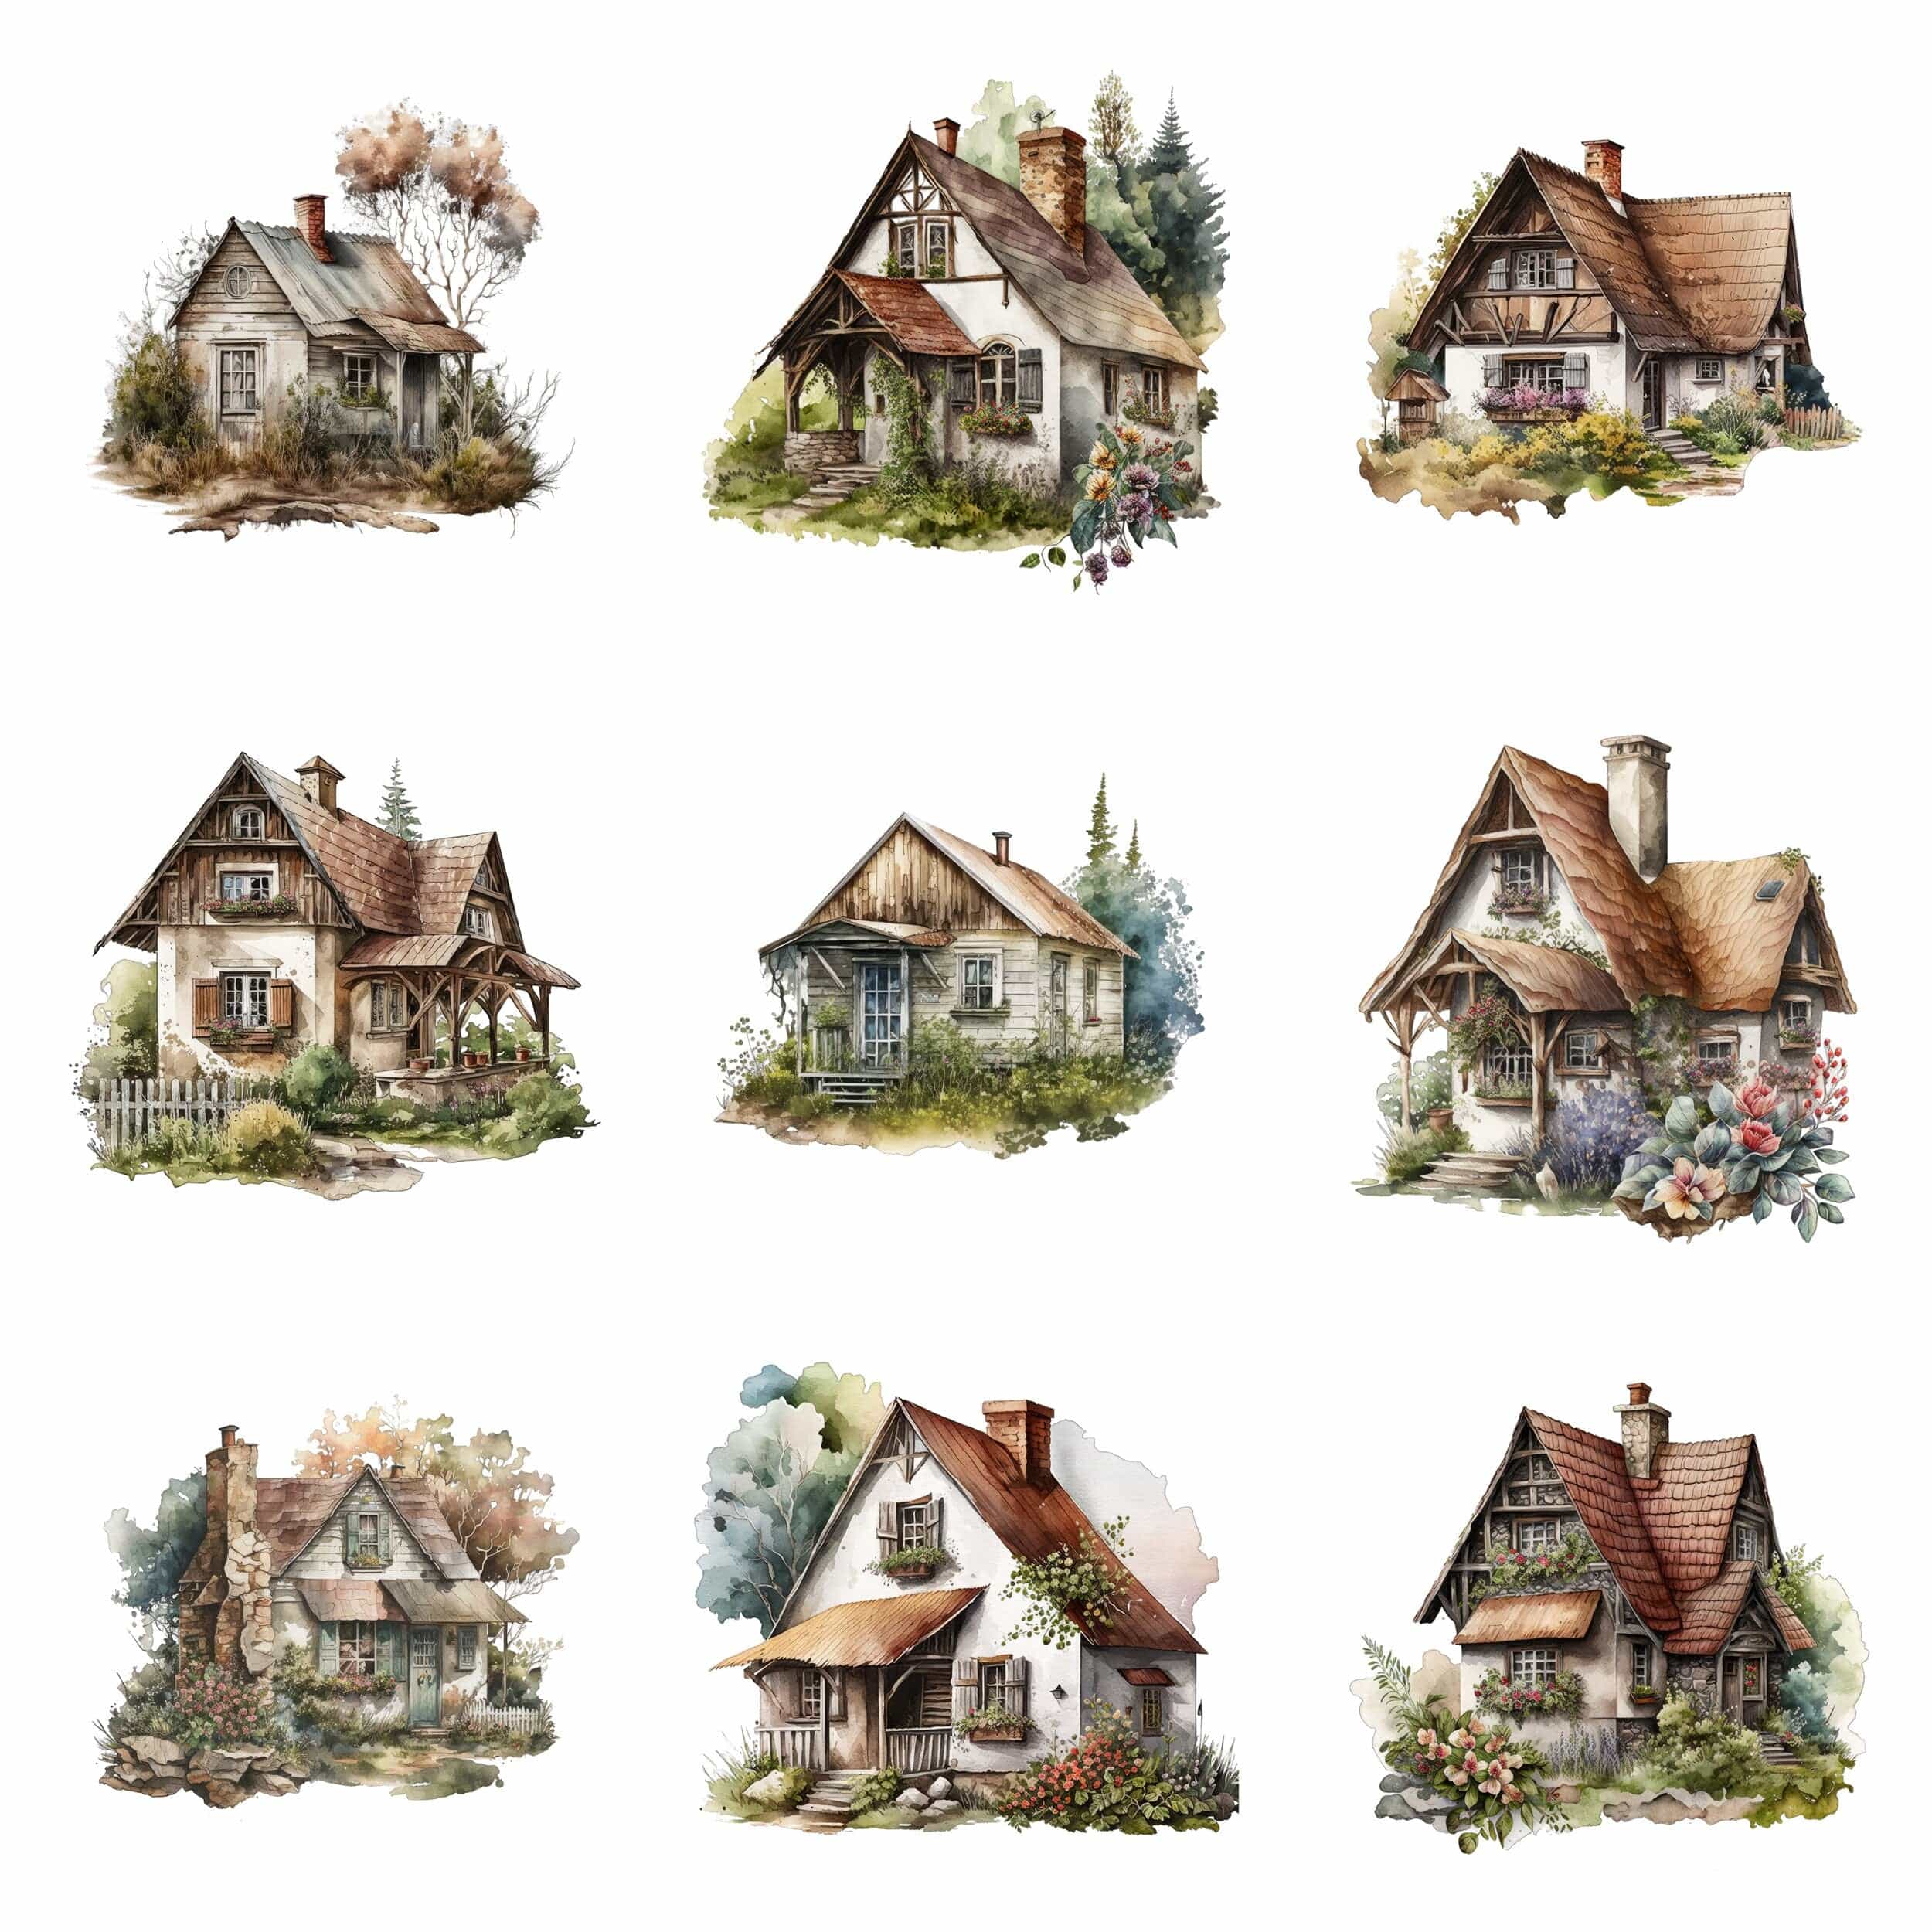 Rustic House & Cottage Bundle - 59 High-Quality Images, Vintage Homes, Cozy Cabins, Country Living, Digital Download, Printable Wall Art Digital Download Sumobundle